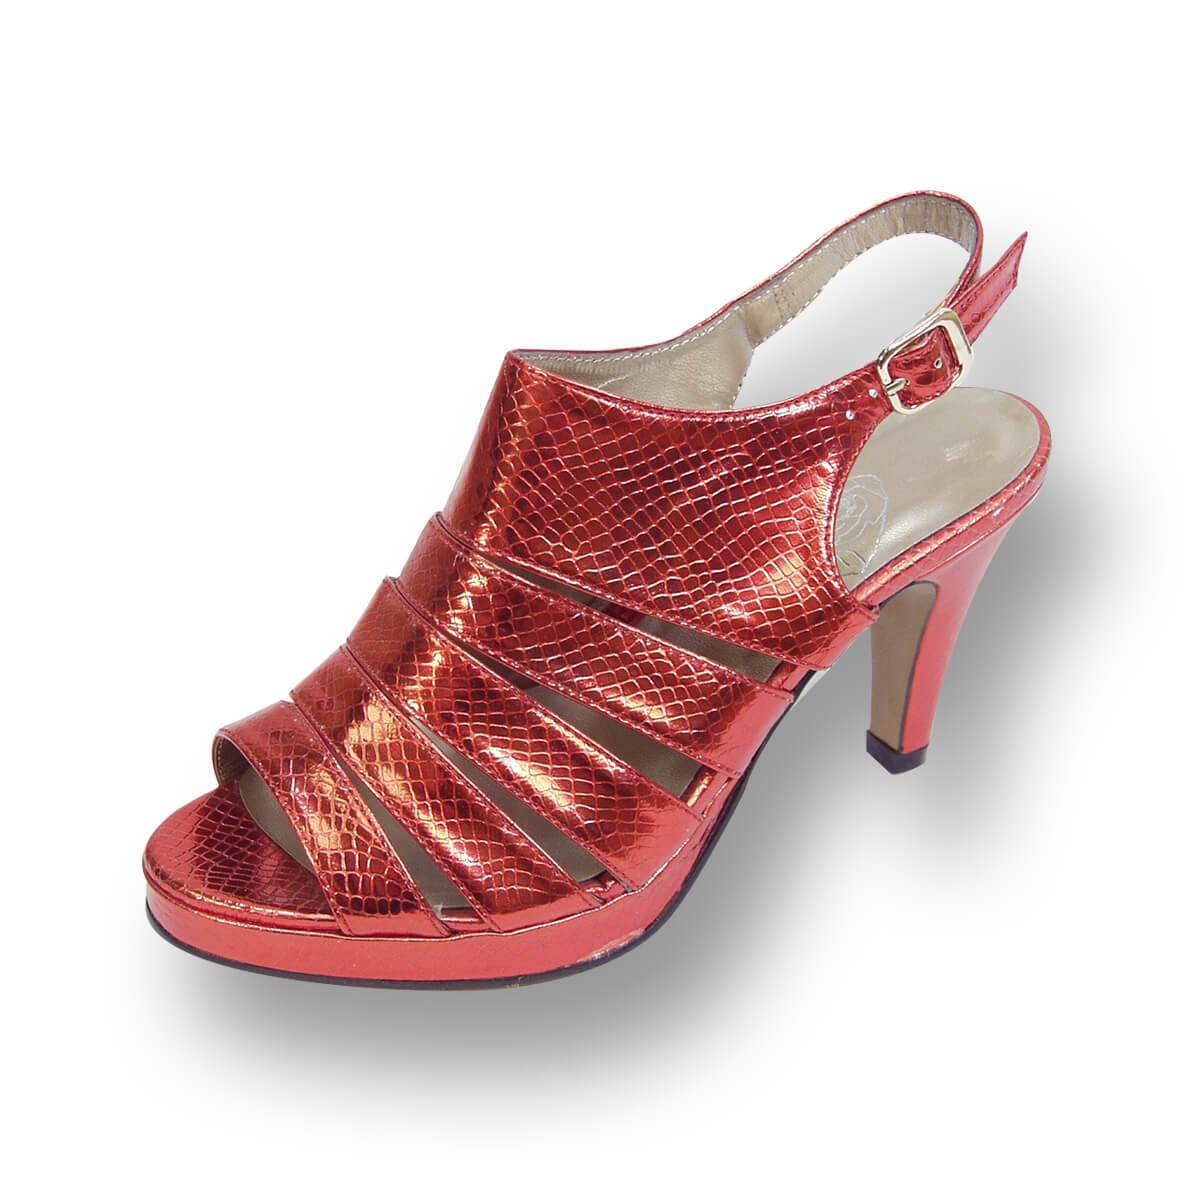 FLORAL Jules Women's Wide Width Platform Dress Shoes